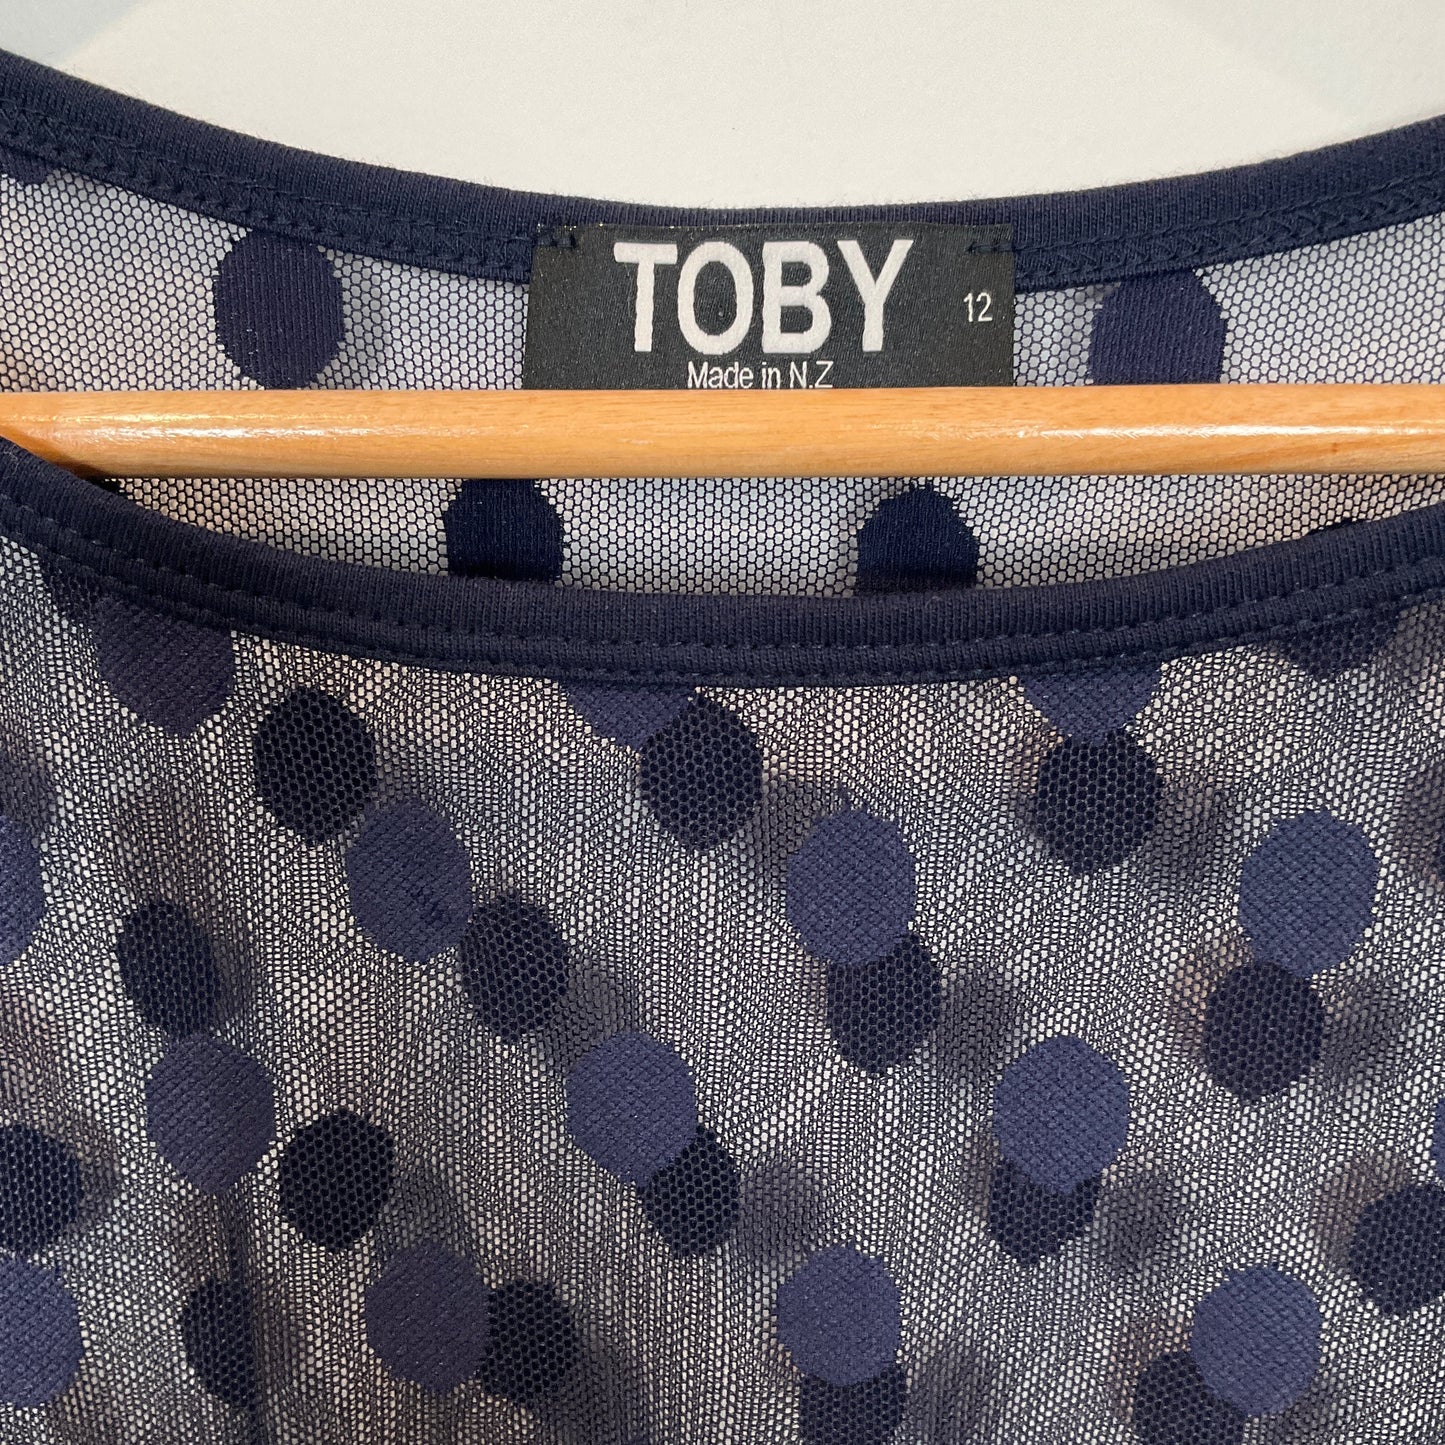 Toby - Sheer Tunic Top Shirts & Tops